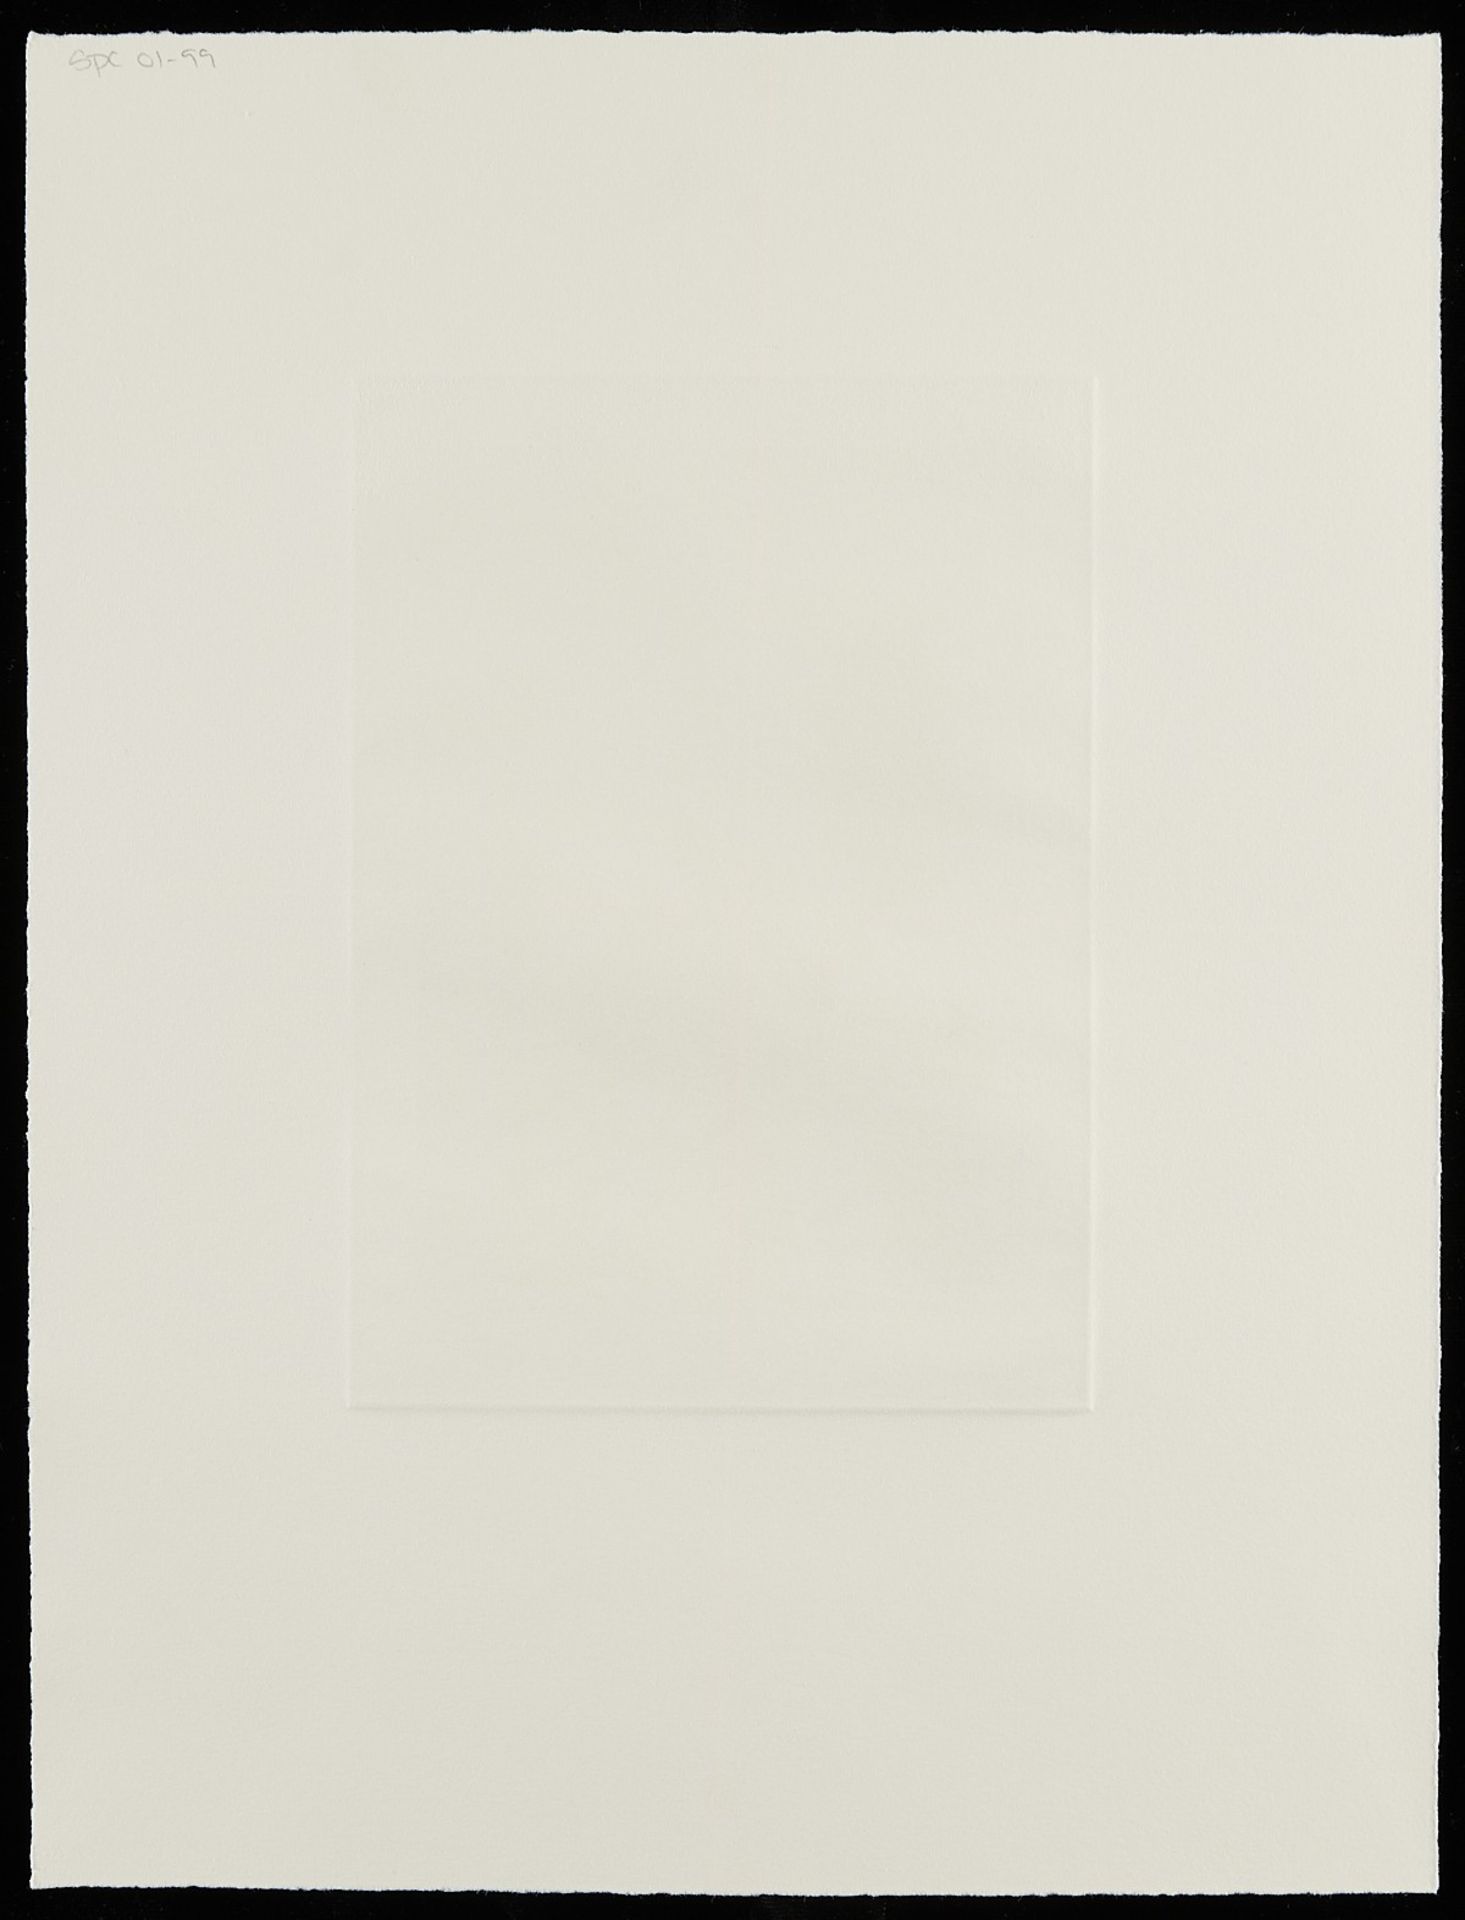 Grp: 8 Chagoya "Return To Goya's Caprichos" Suite - Image 9 of 40